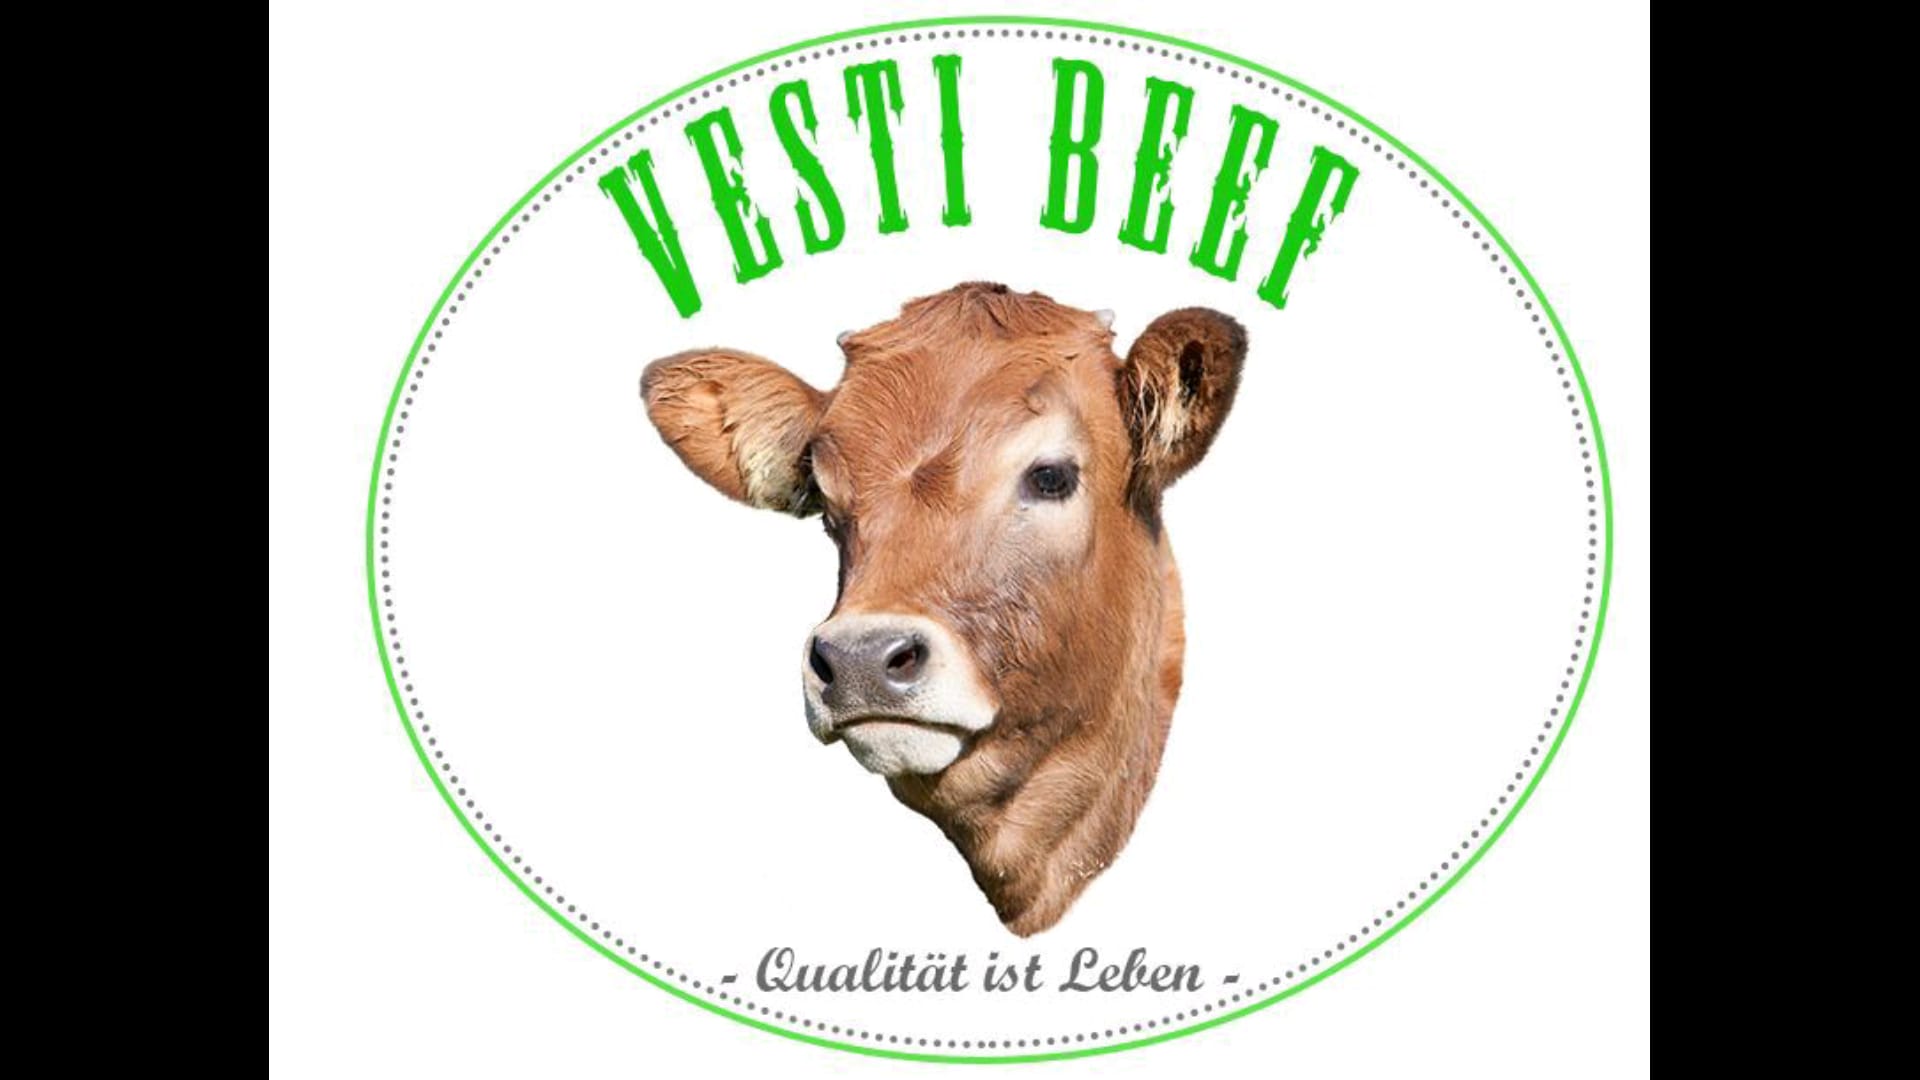 Vesti Beef